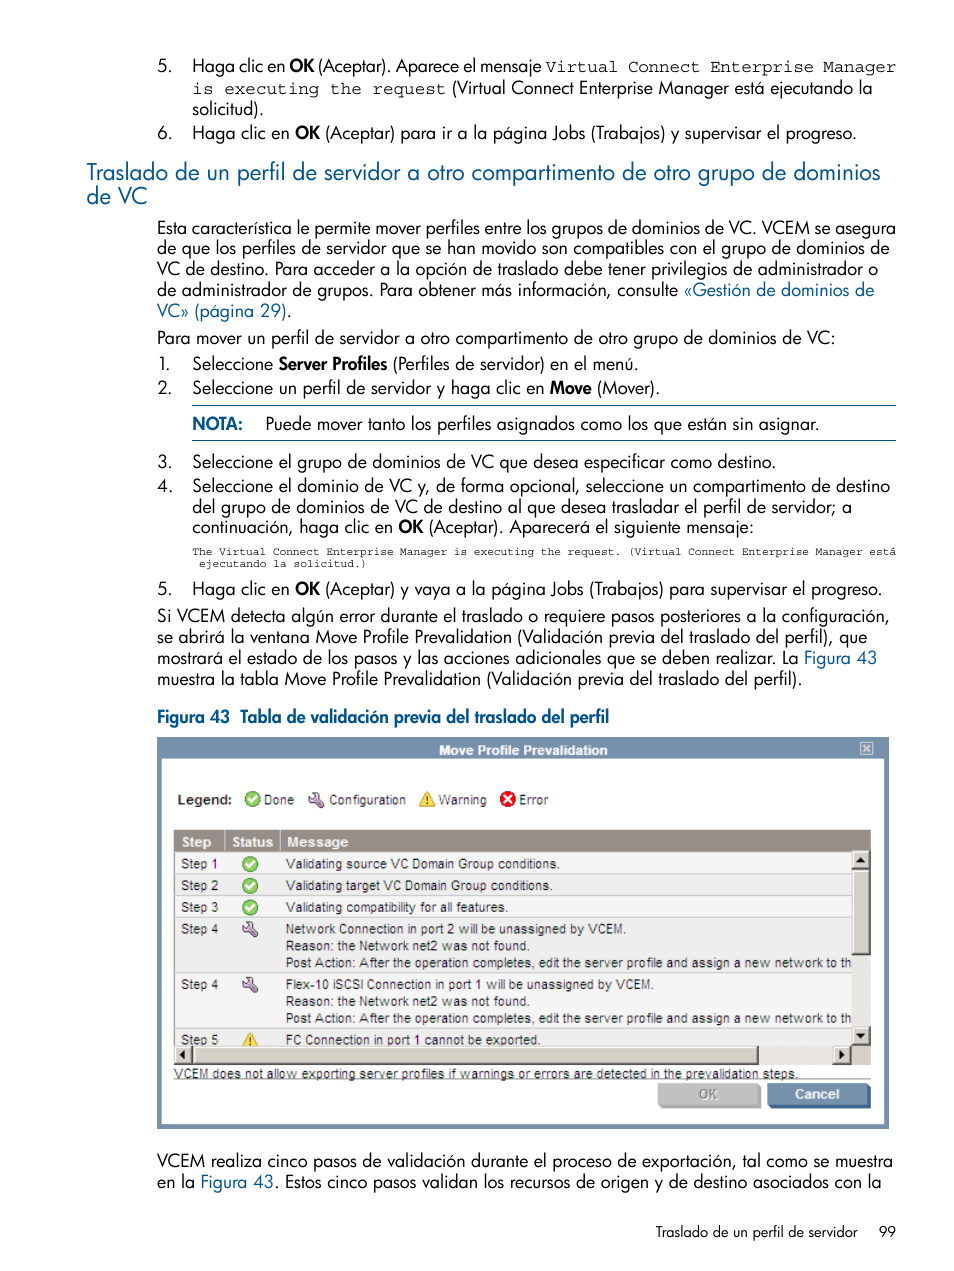 Dominios de vc | HP Software HP Virtual Connect Enterprise Manager Manual del usuario | Página 99 / 168